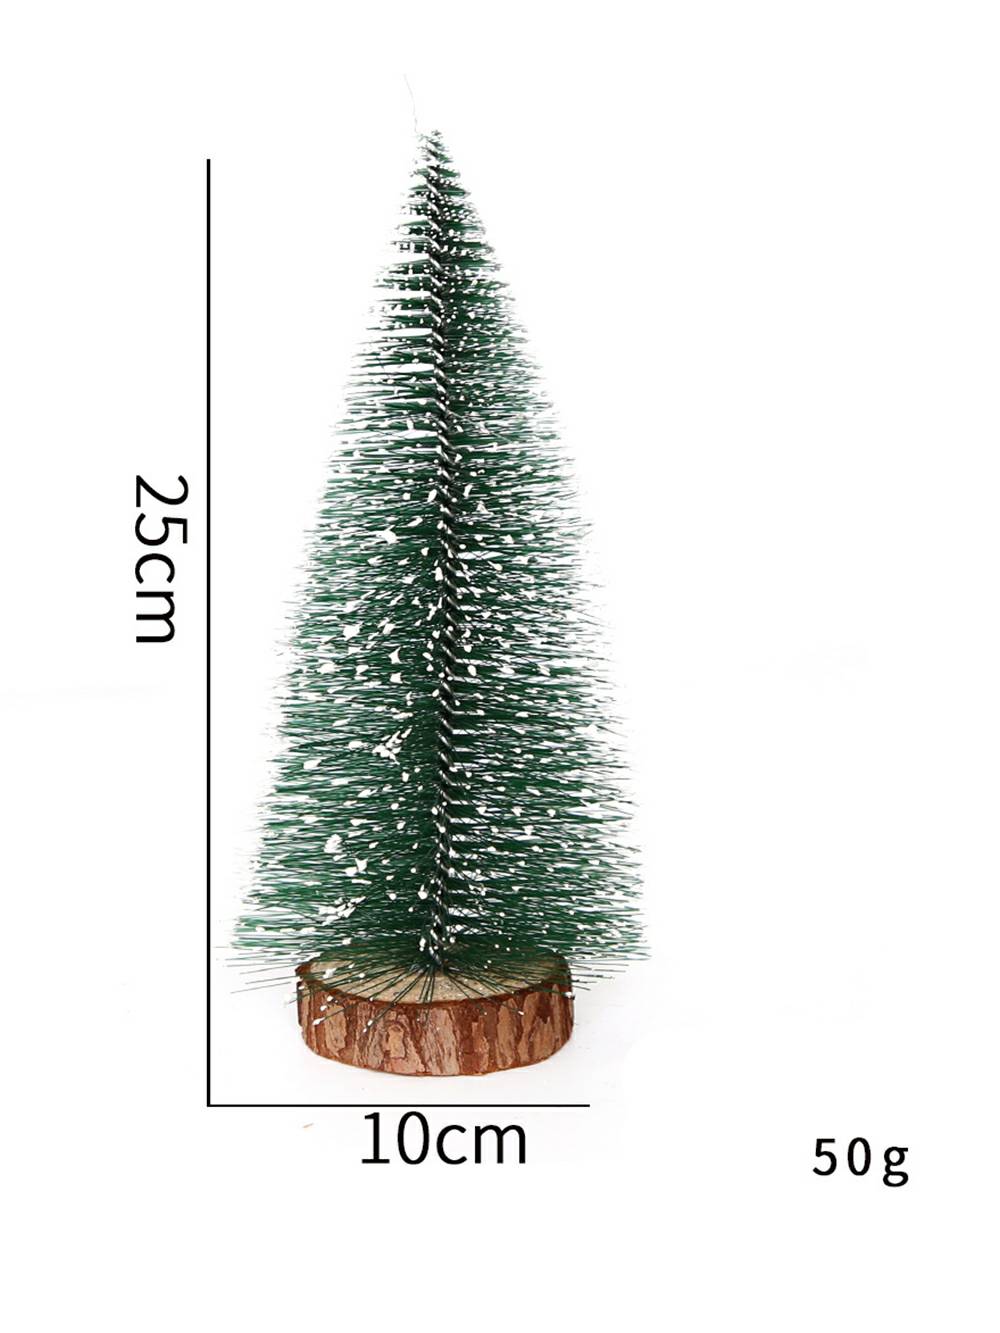 DIY Snow-Covered Pine Christmas Tree